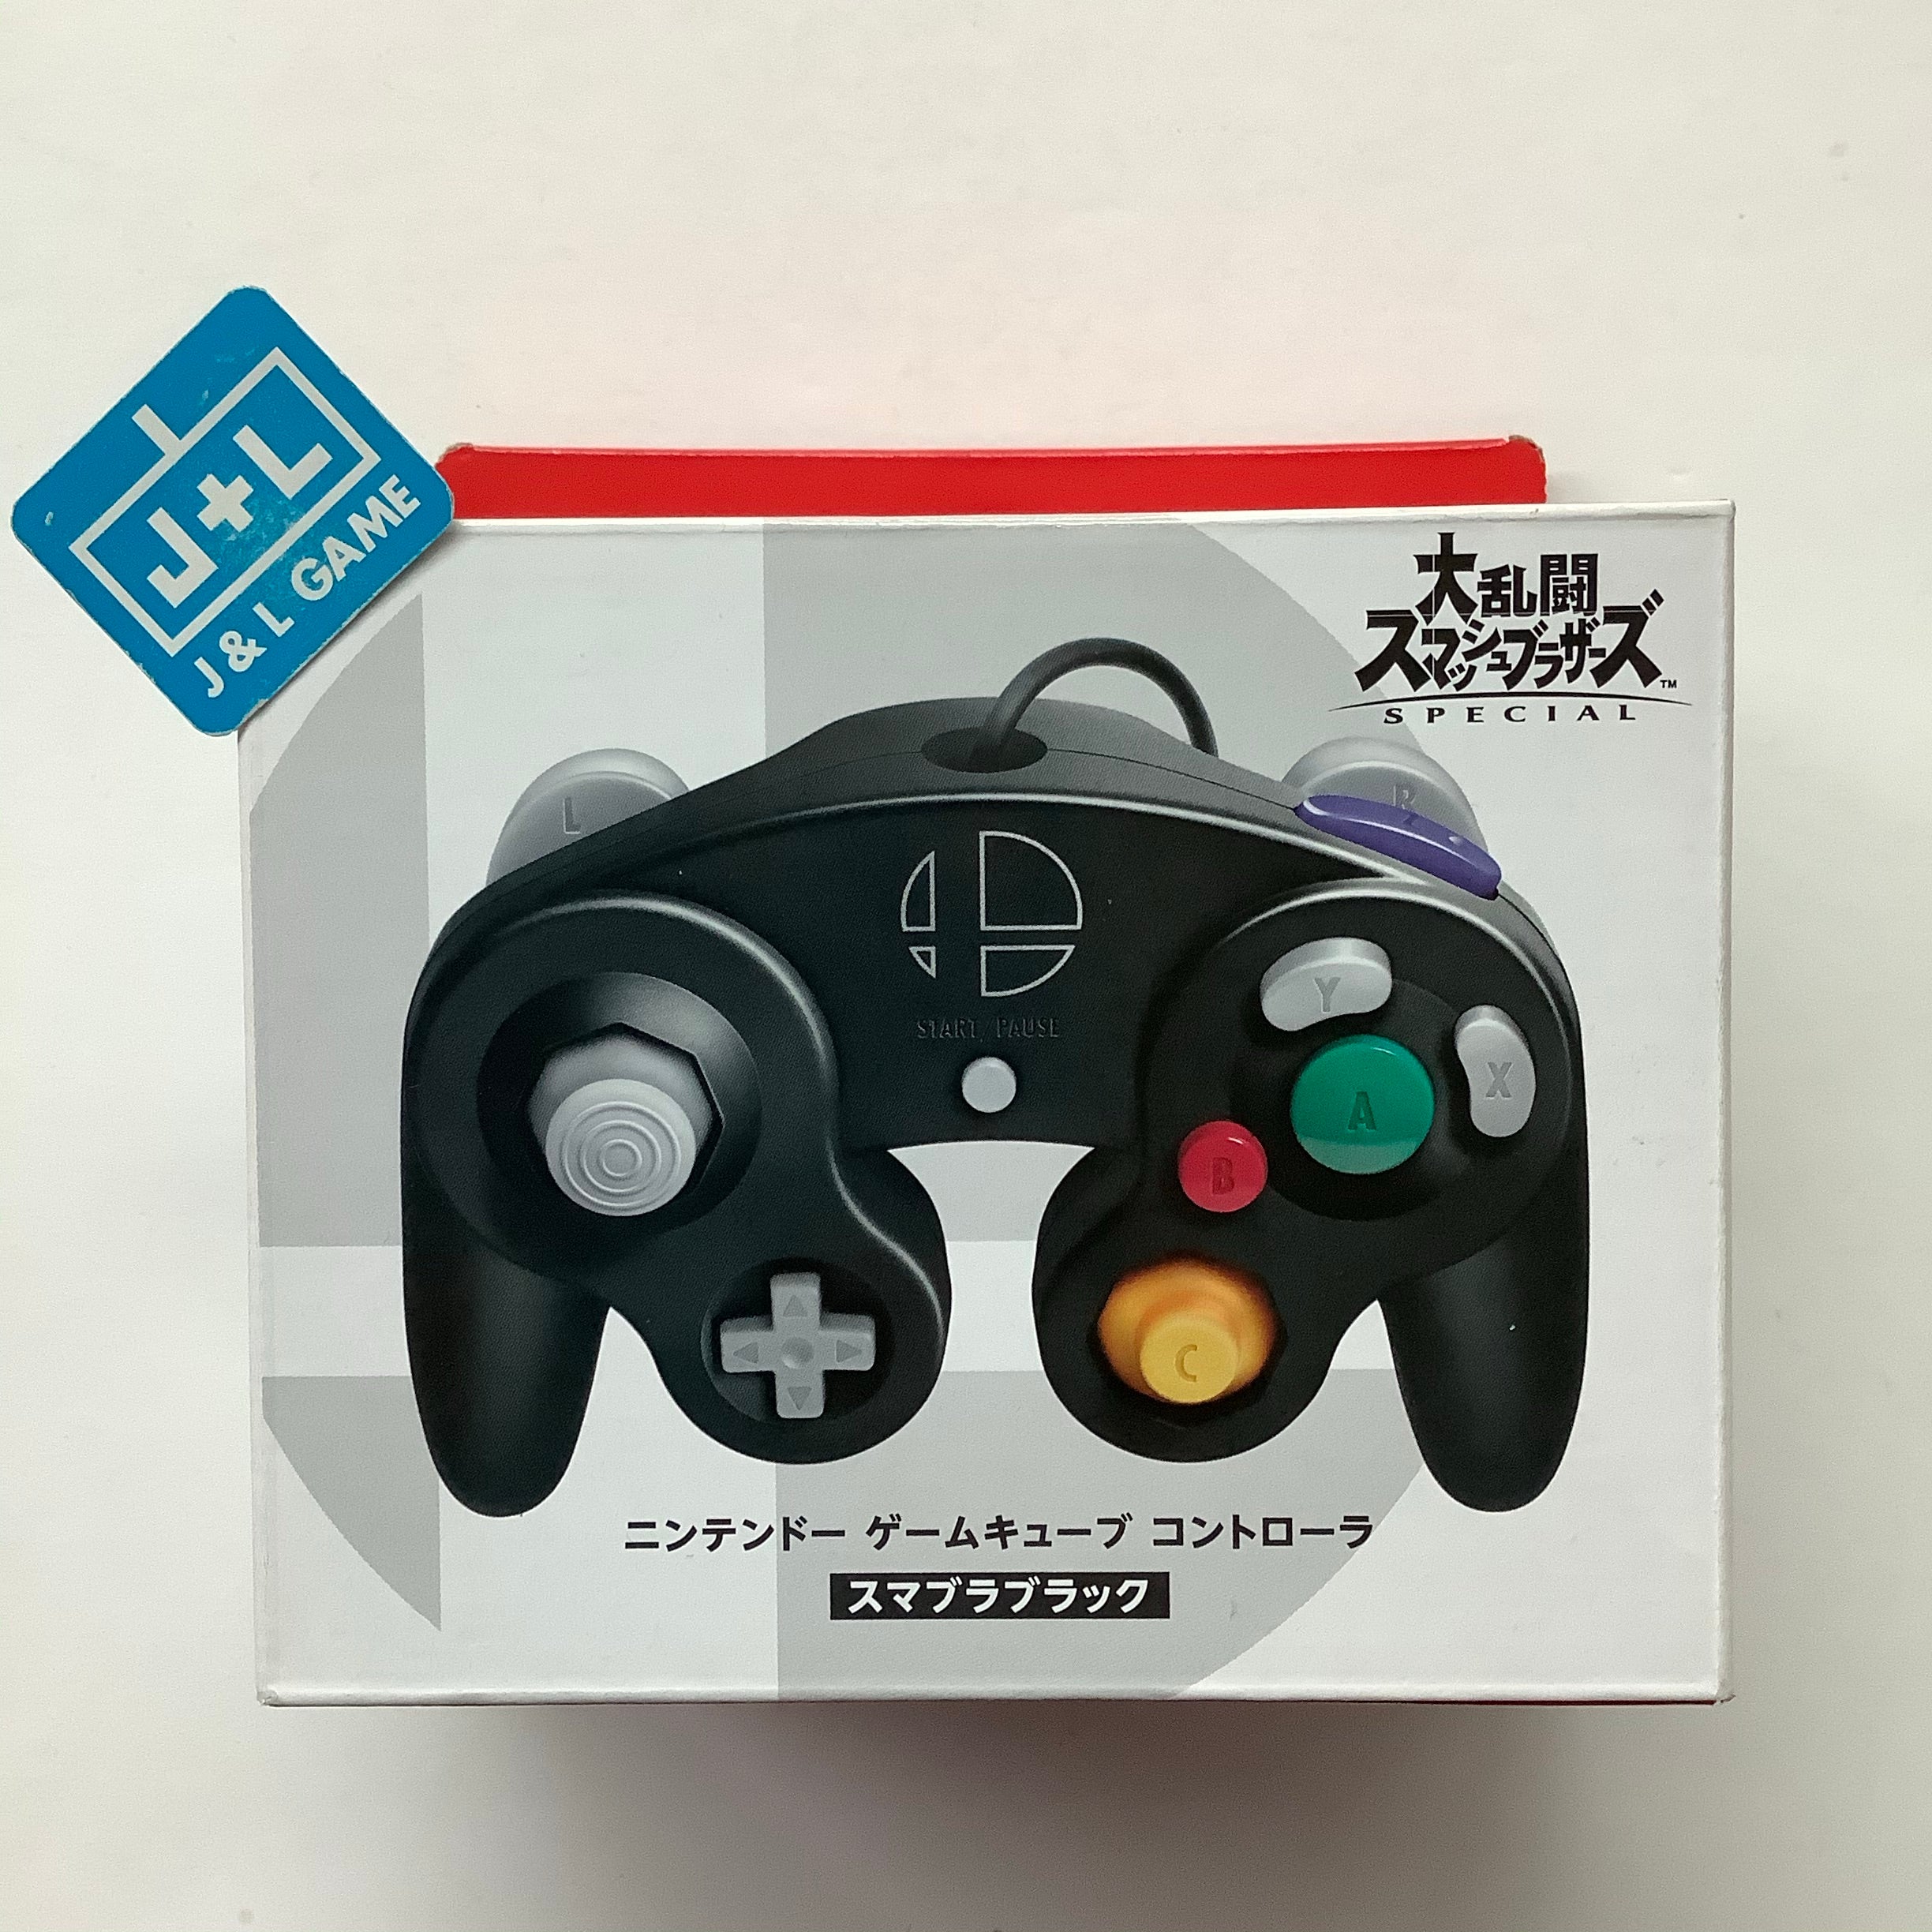 Nintendo GameCube Controller (Super Smash Bros. Ultimate Edition) - (NSW) Nintendo Switch (Japanese Import) Accessories Nintendo   